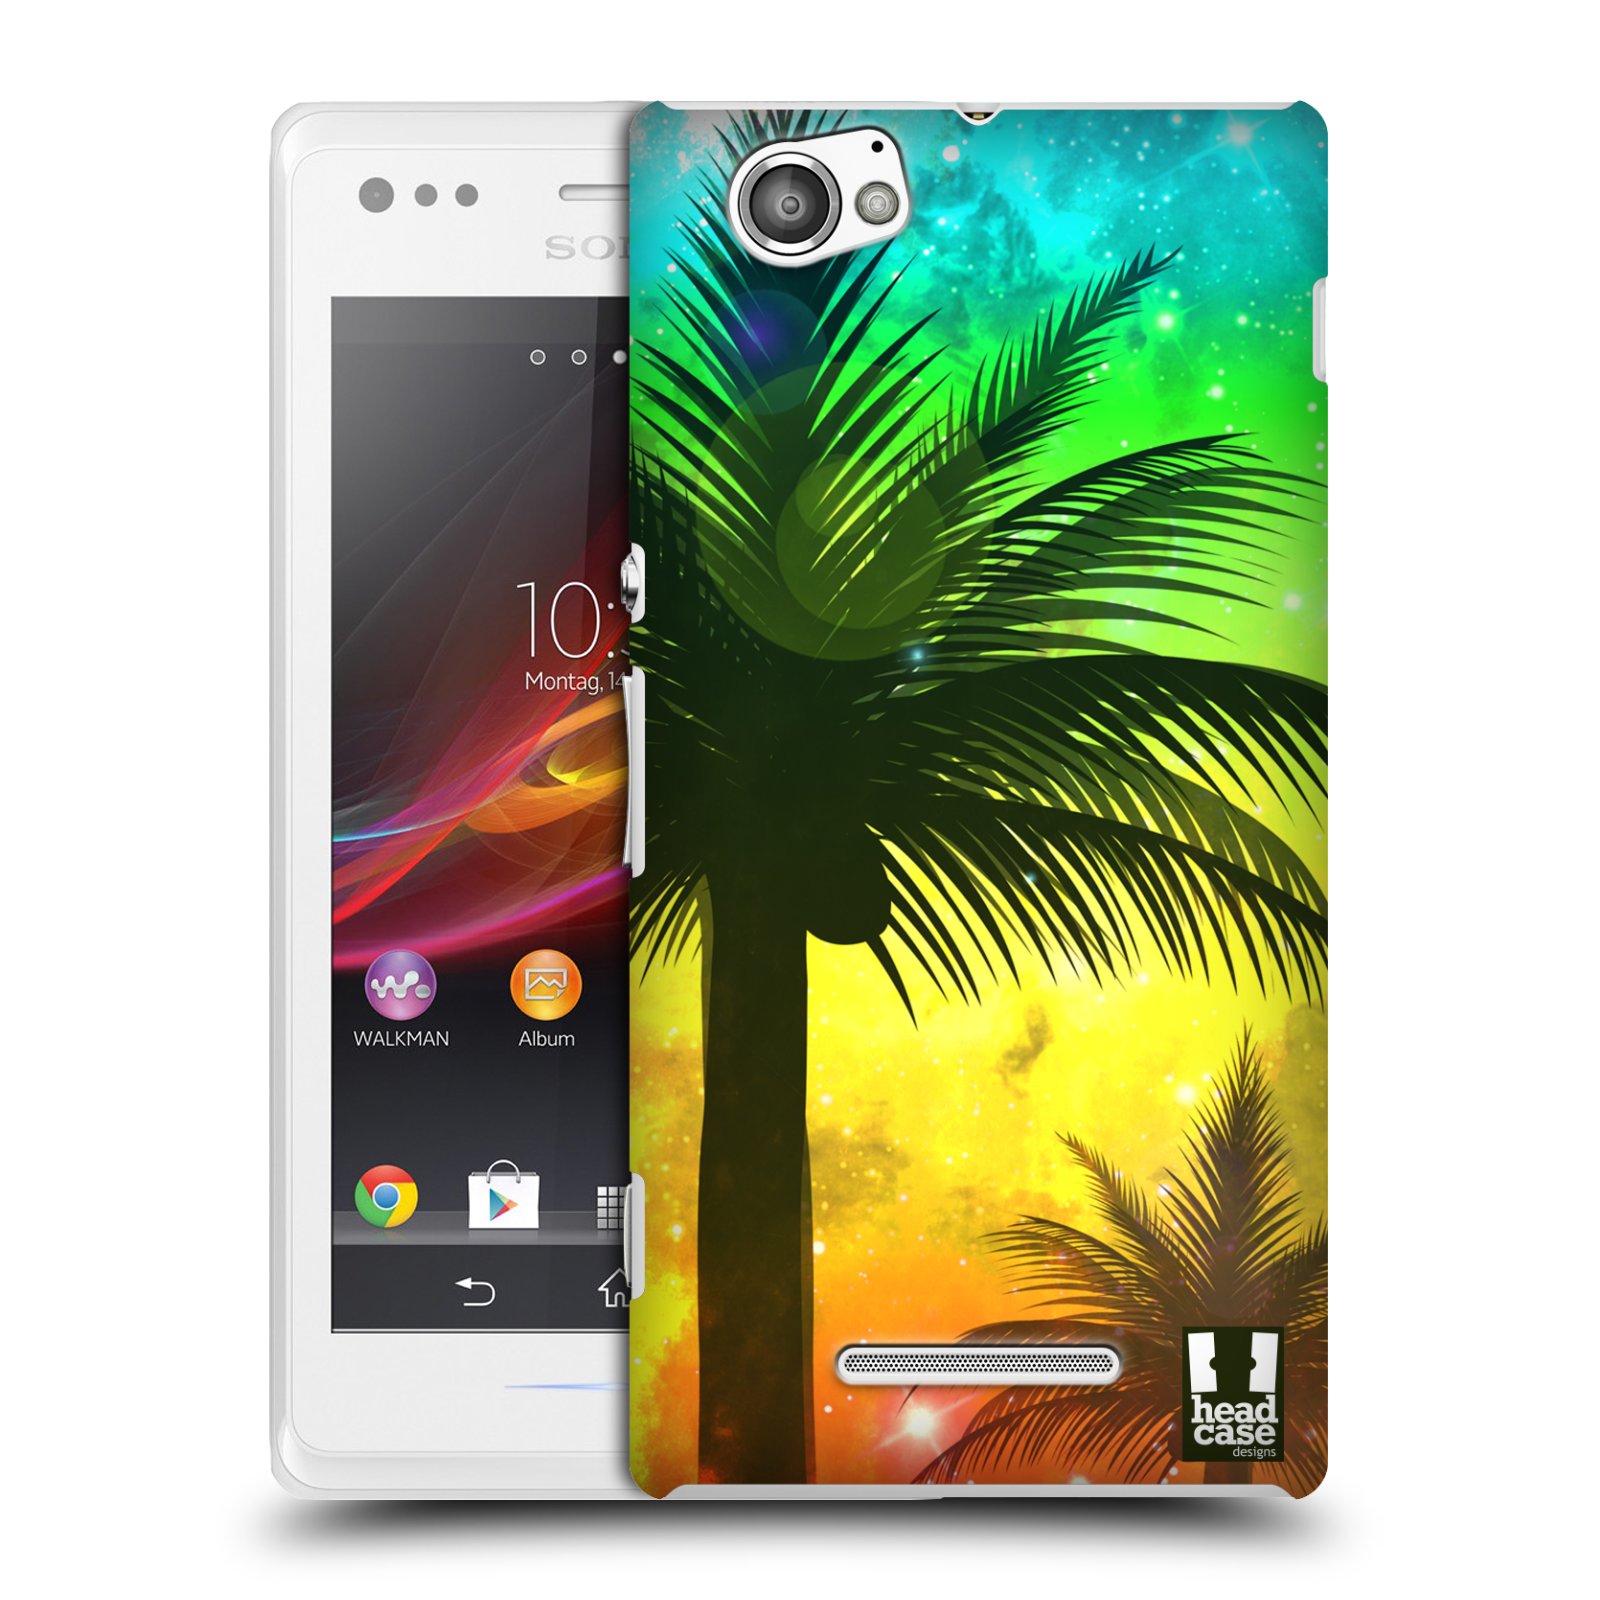 HEAD CASE plastový obal na mobil Sony Xperia M vzor Kreslený motiv silueta moře a palmy ZELENÁ A ORANŽOVÁ